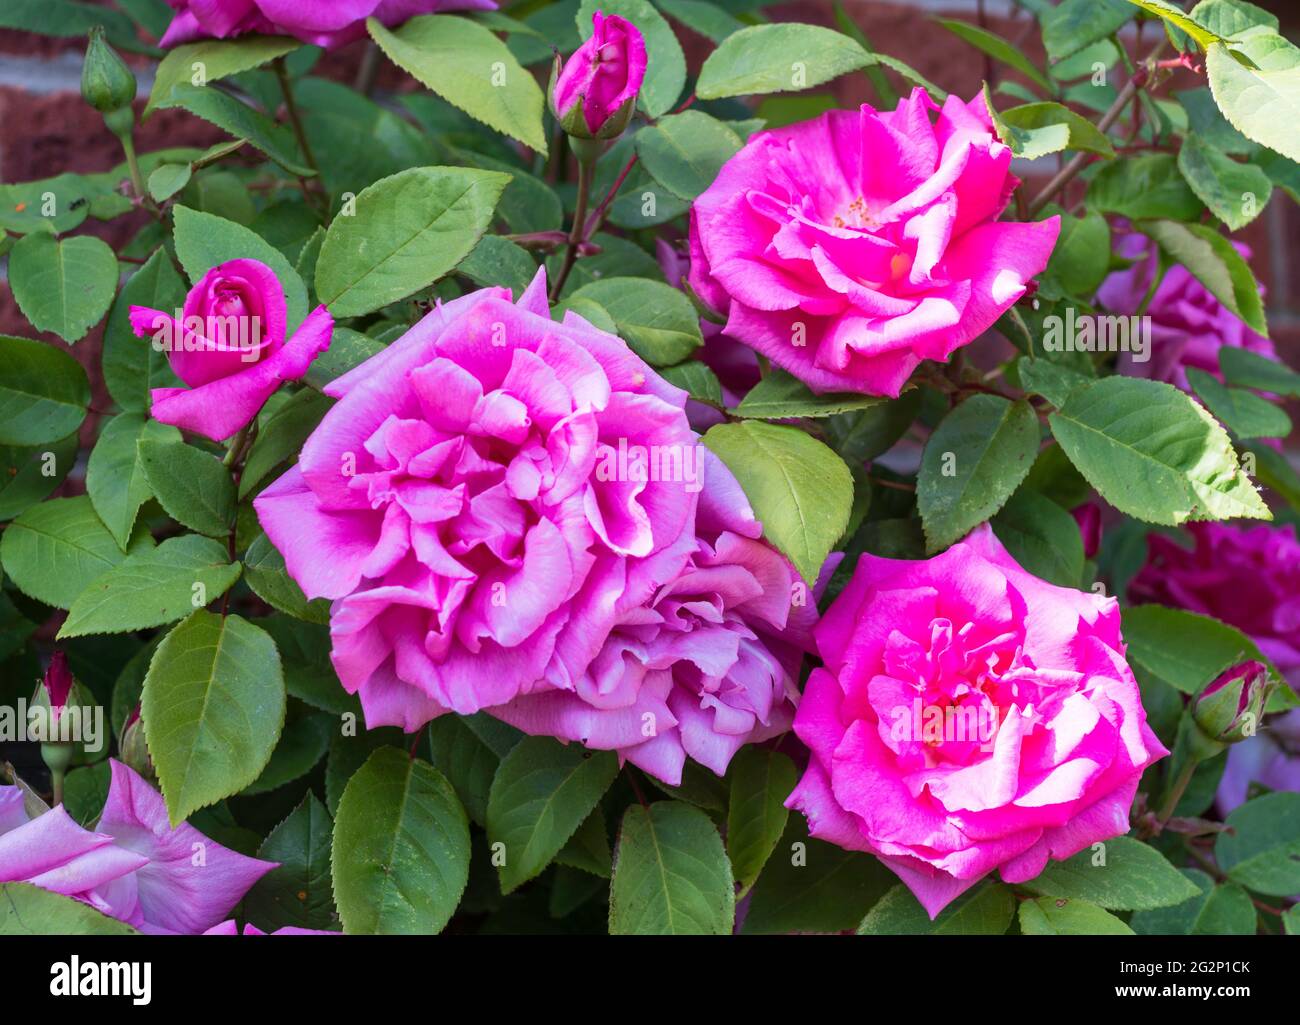 Flowers of the pink thornless climbing rose Zephirine Drouhin, England UK Stock Photo